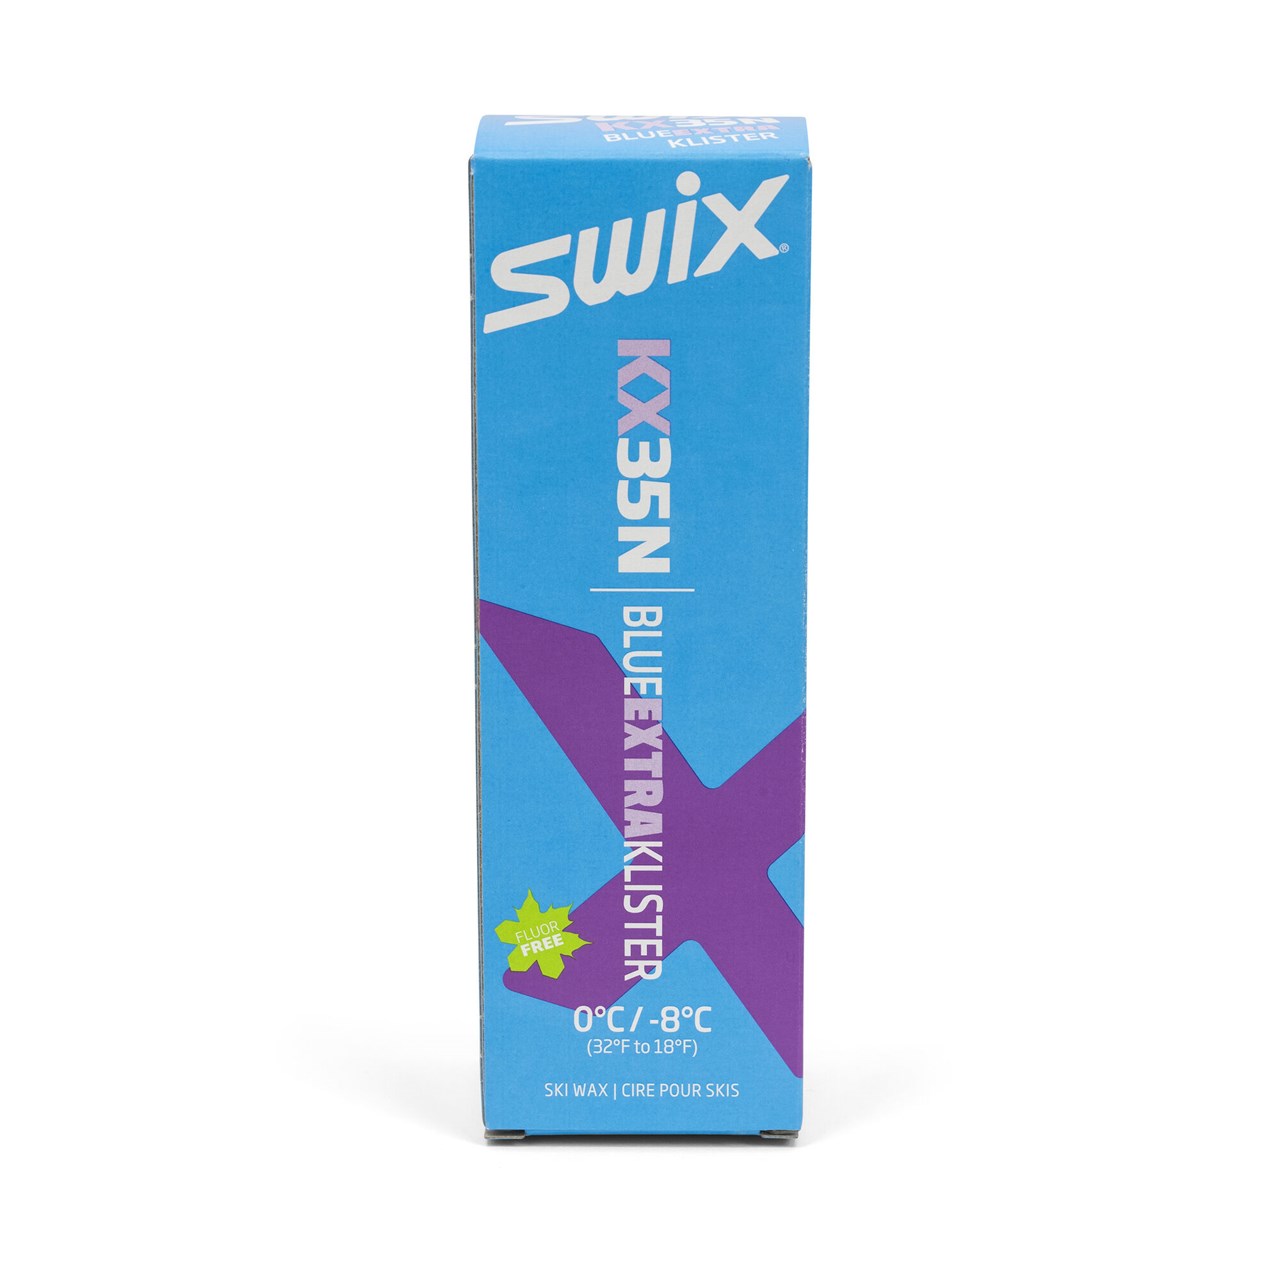 SWIX KX35N Blue Extra Klister, 0°C bis -8°C